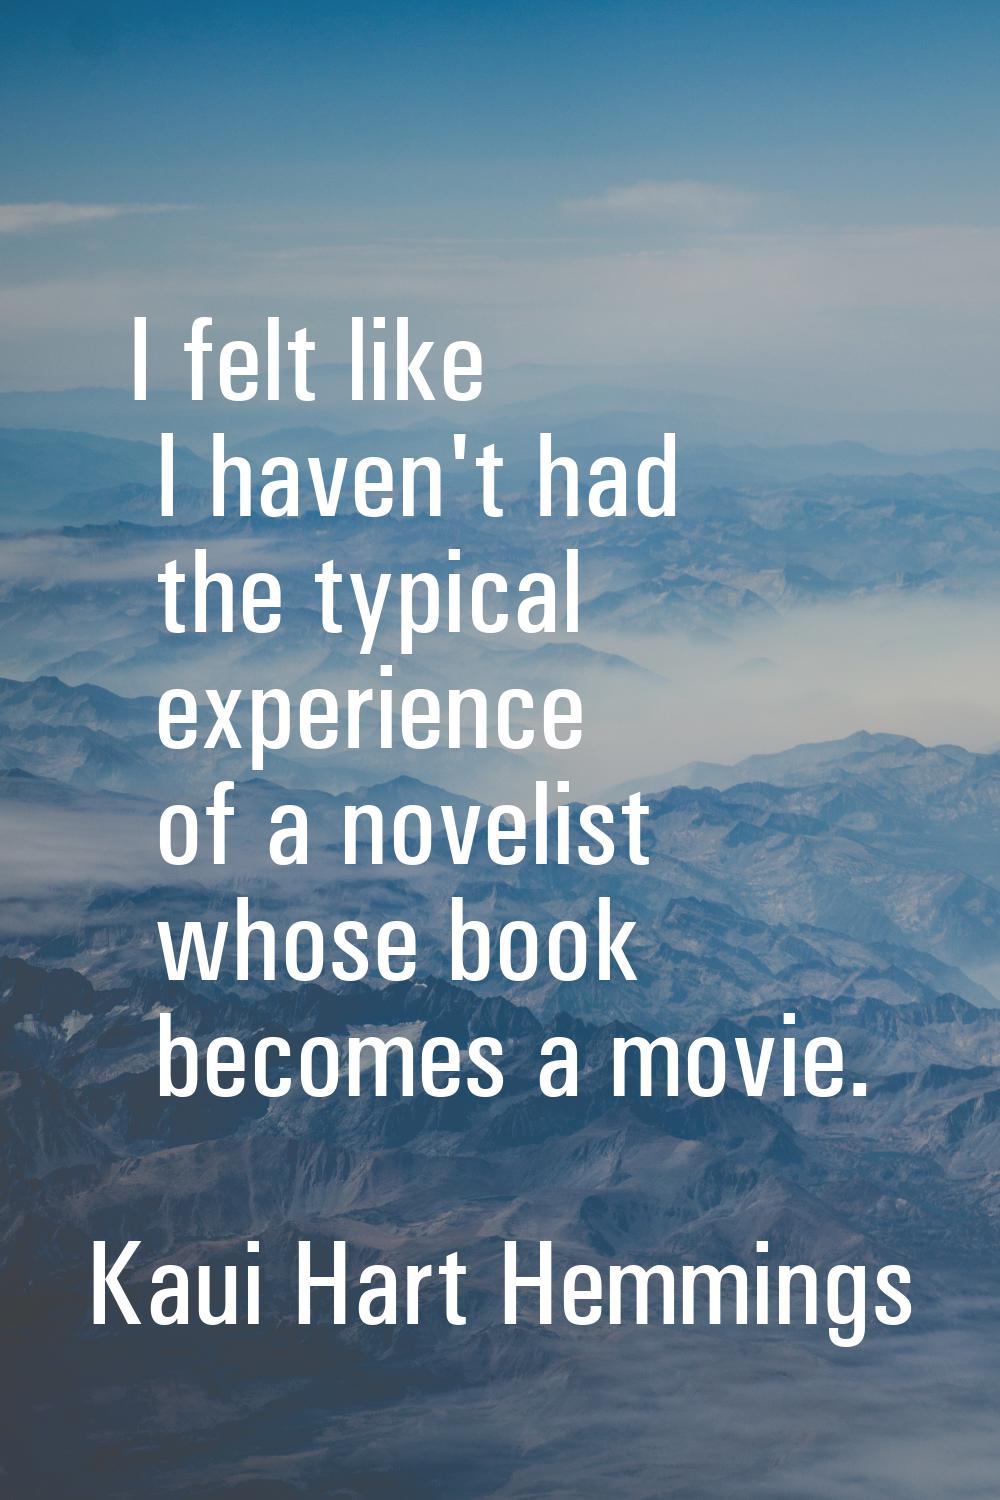 I felt like I haven't had the typical experience of a novelist whose book becomes a movie.